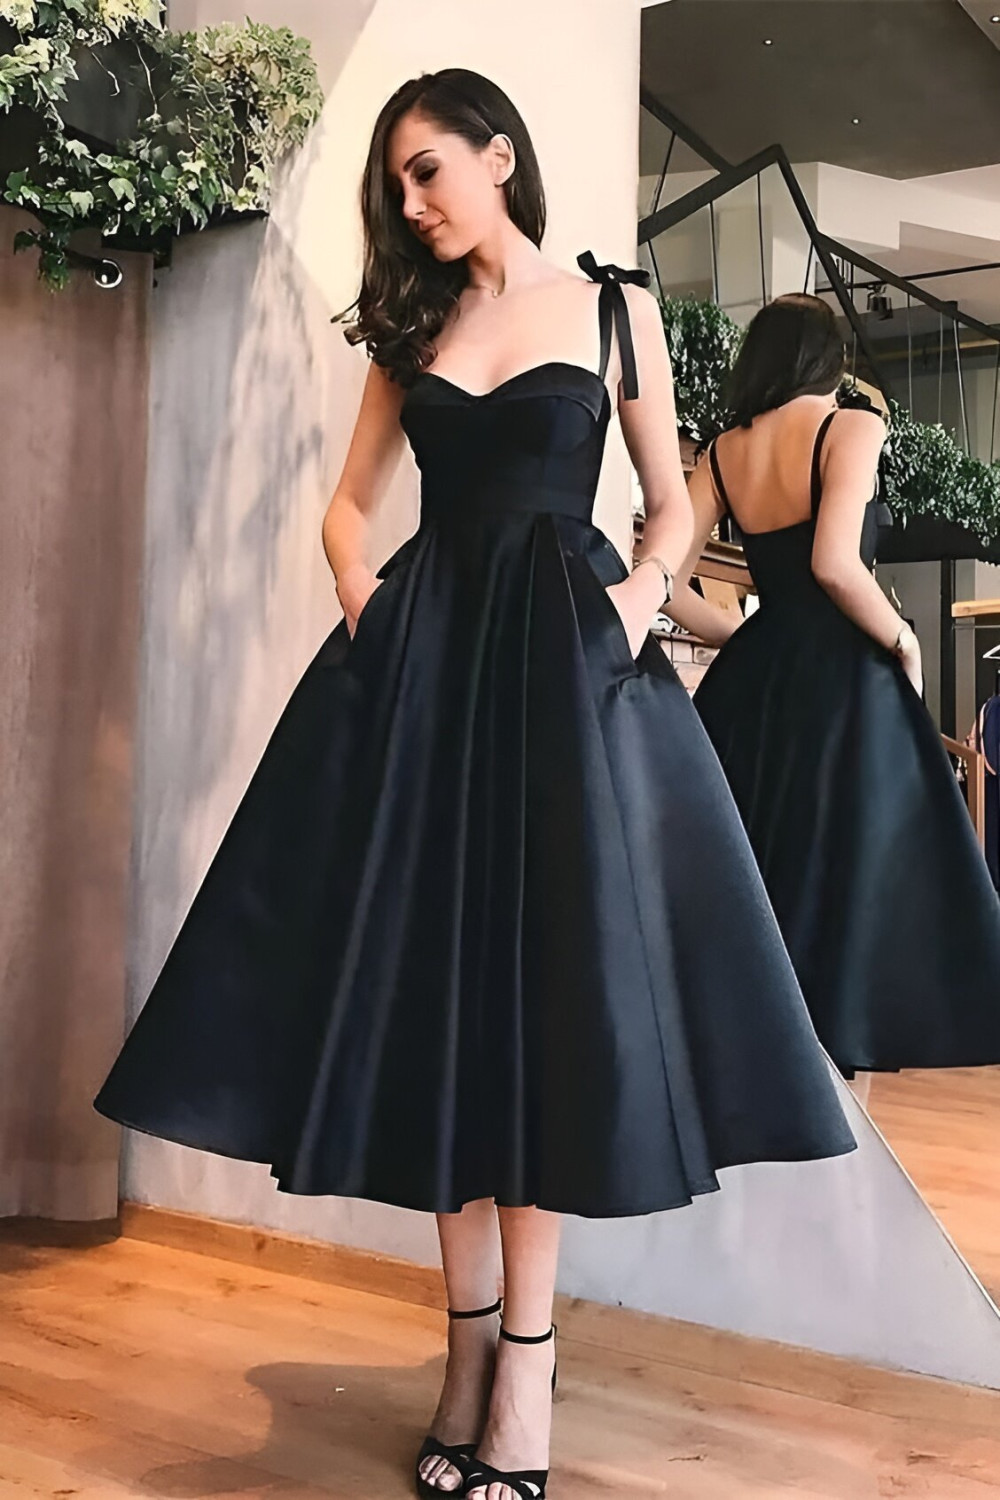 Classy Black Dress